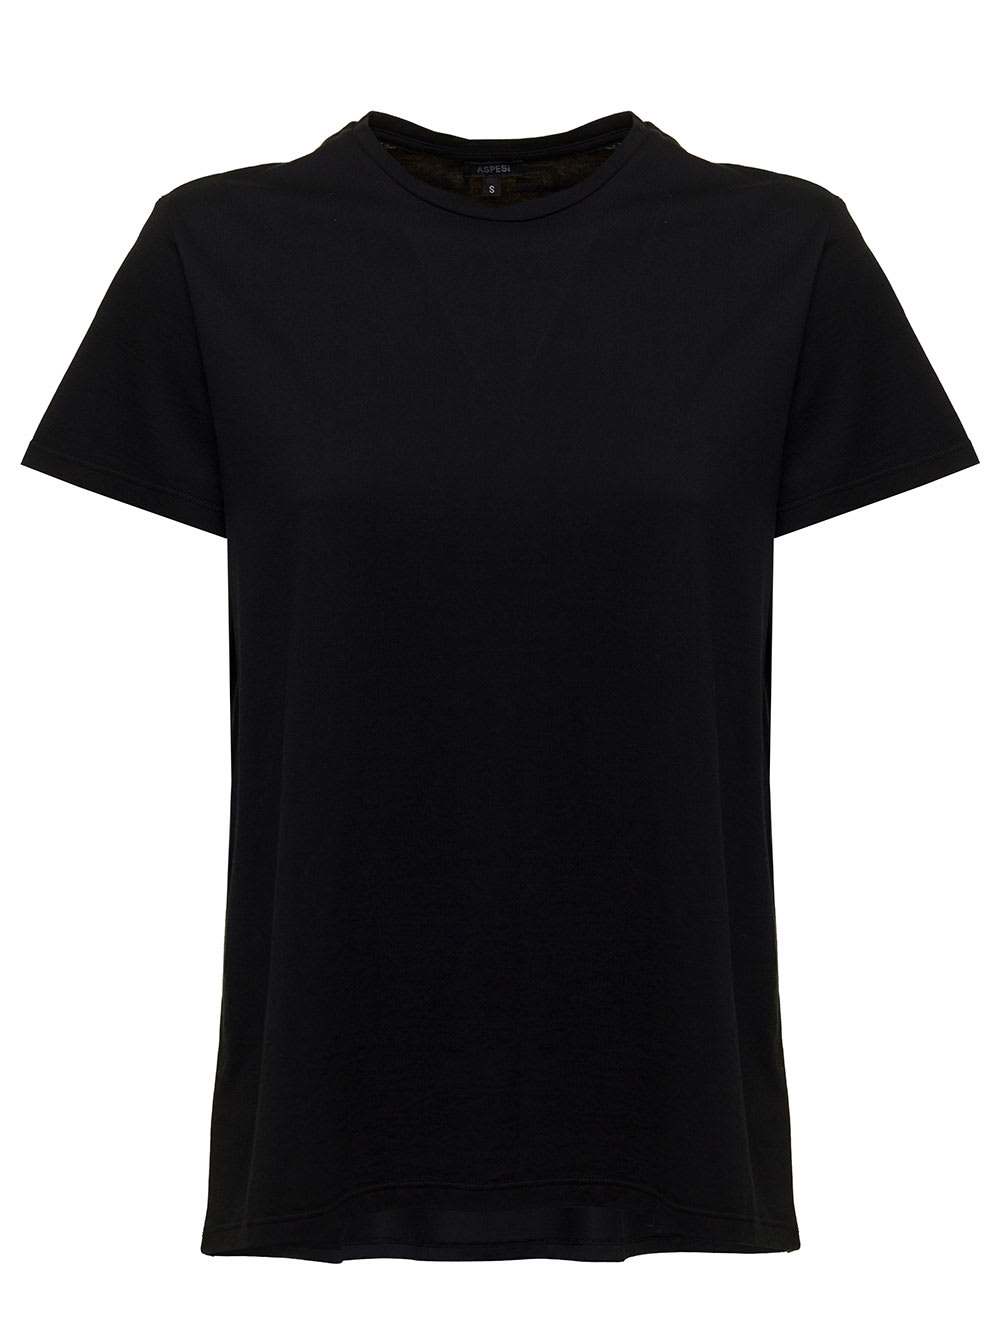 Aspesi Womans Black Cotton Crew Neck T-shirt